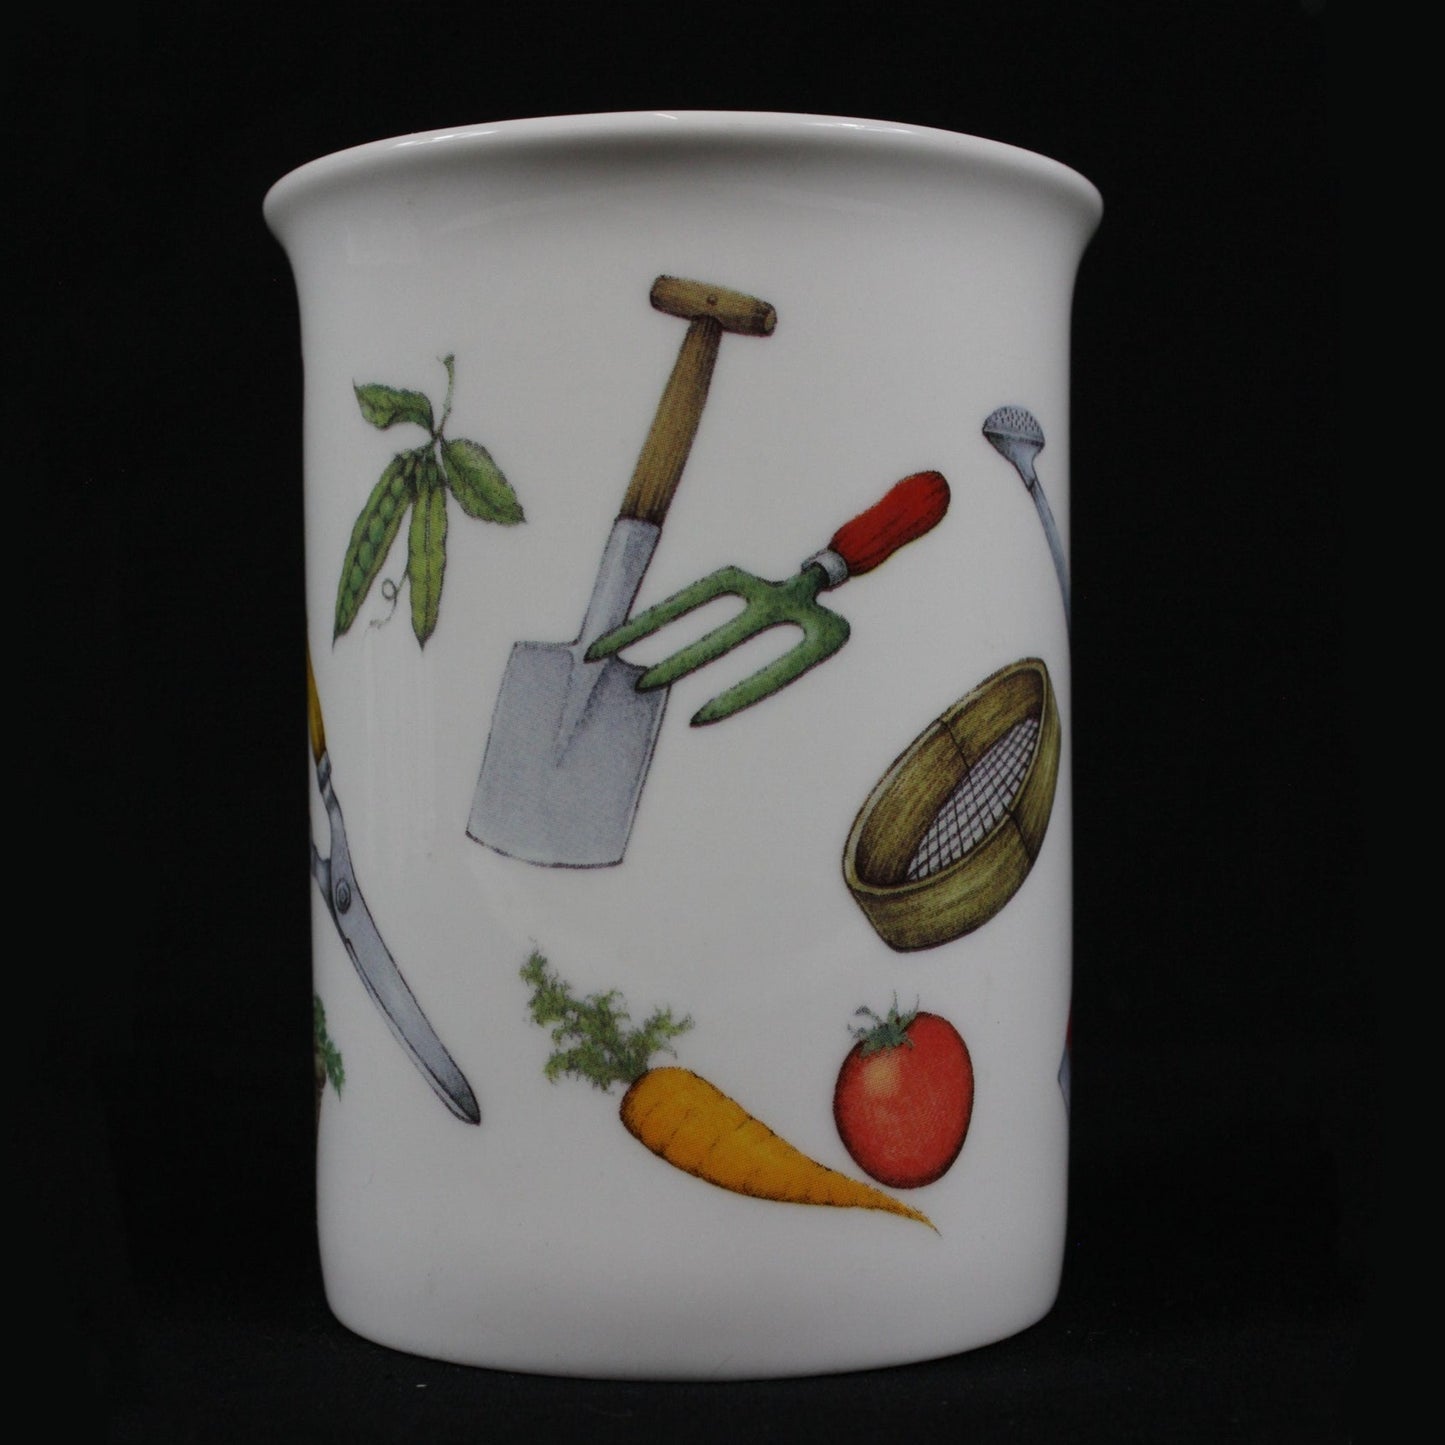 Gardening Tools & Vegetables Mug